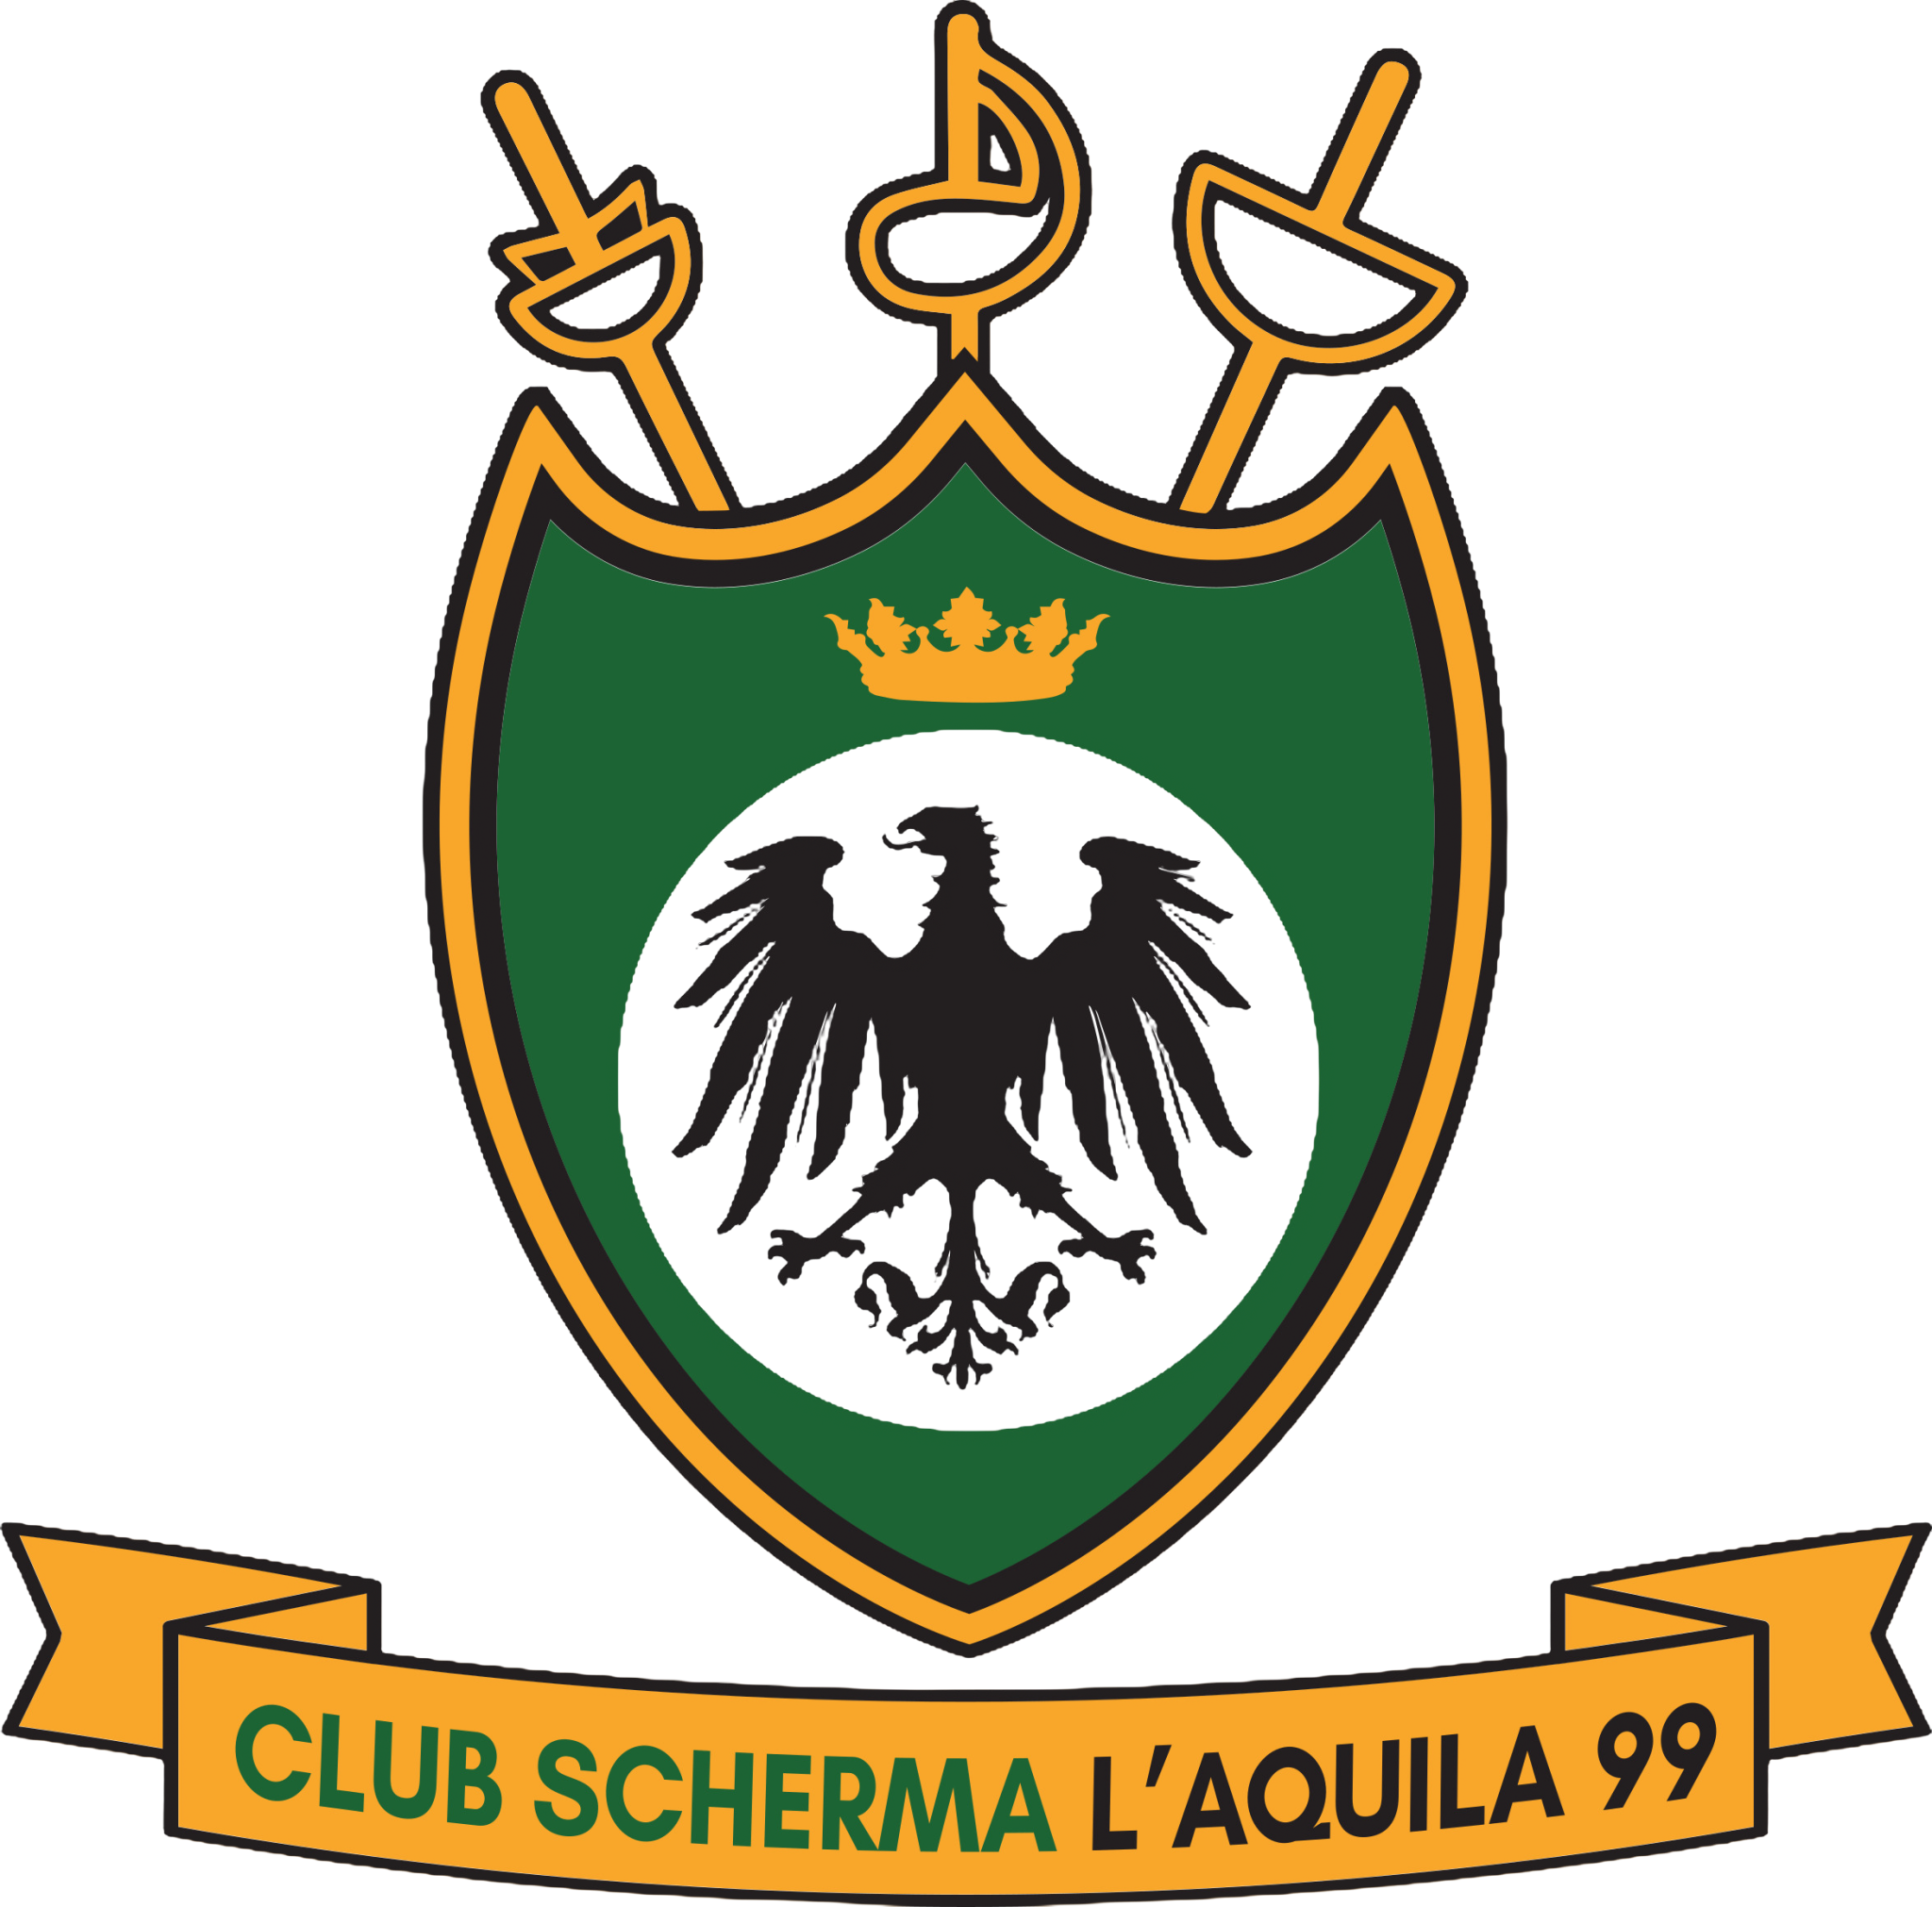 Club Scherma L'Aquila 99